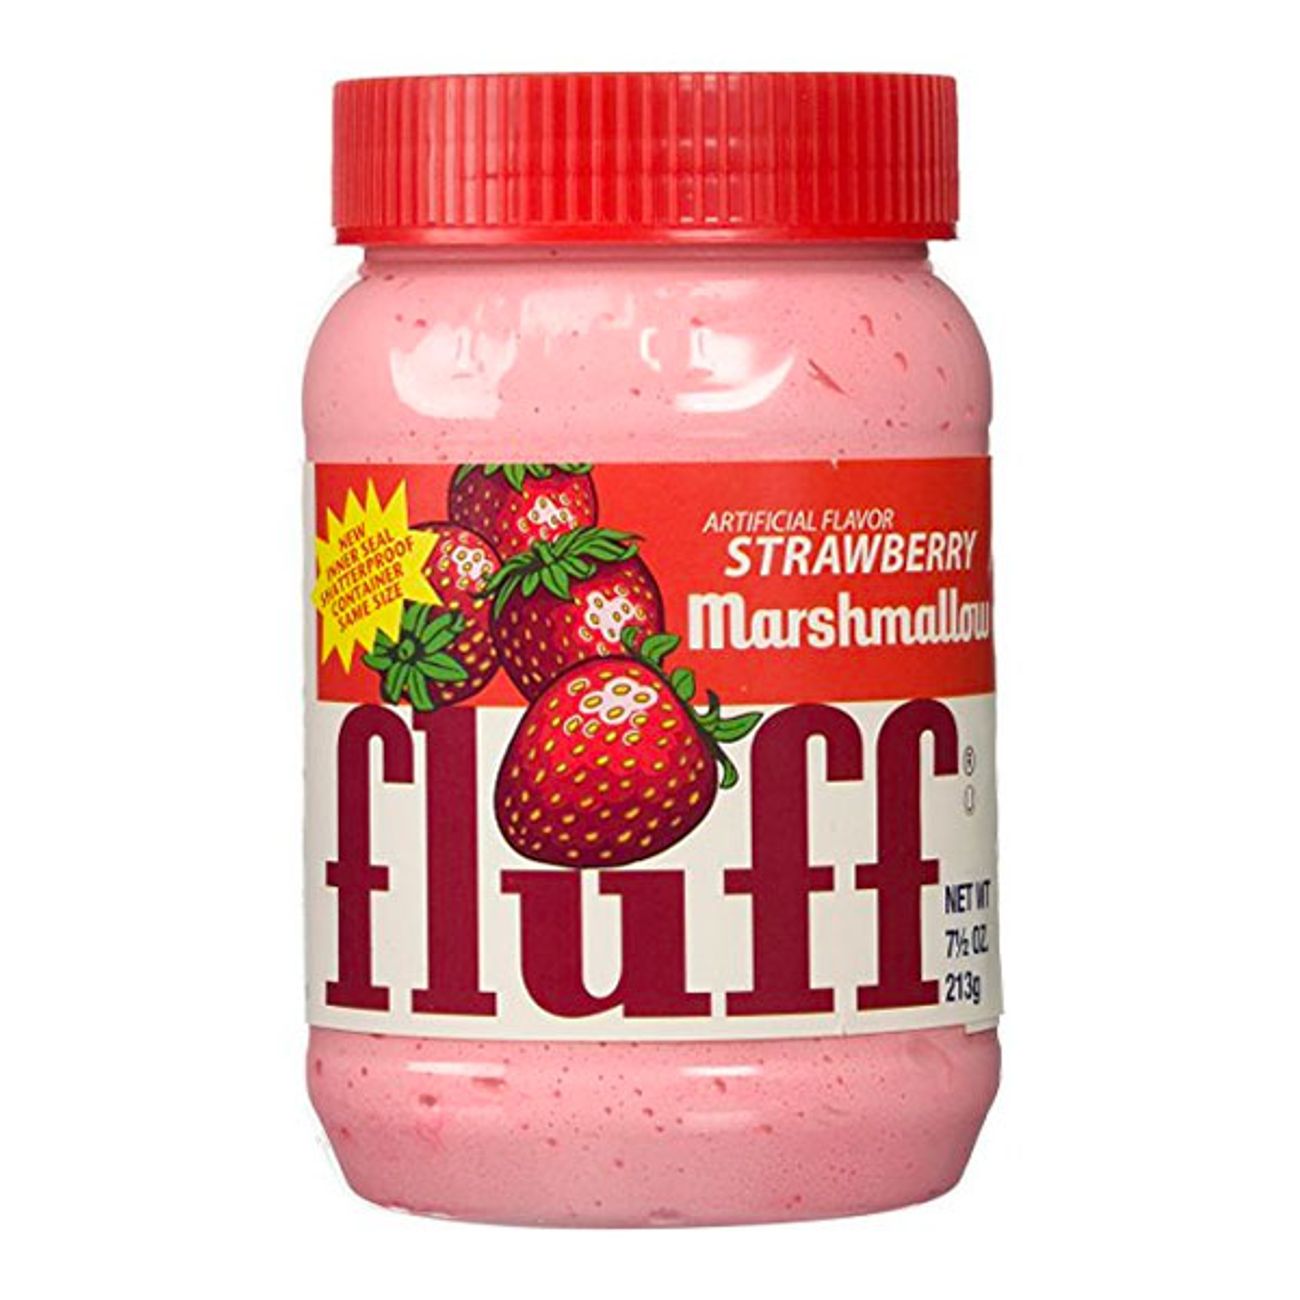 marshmallow-fluff-6